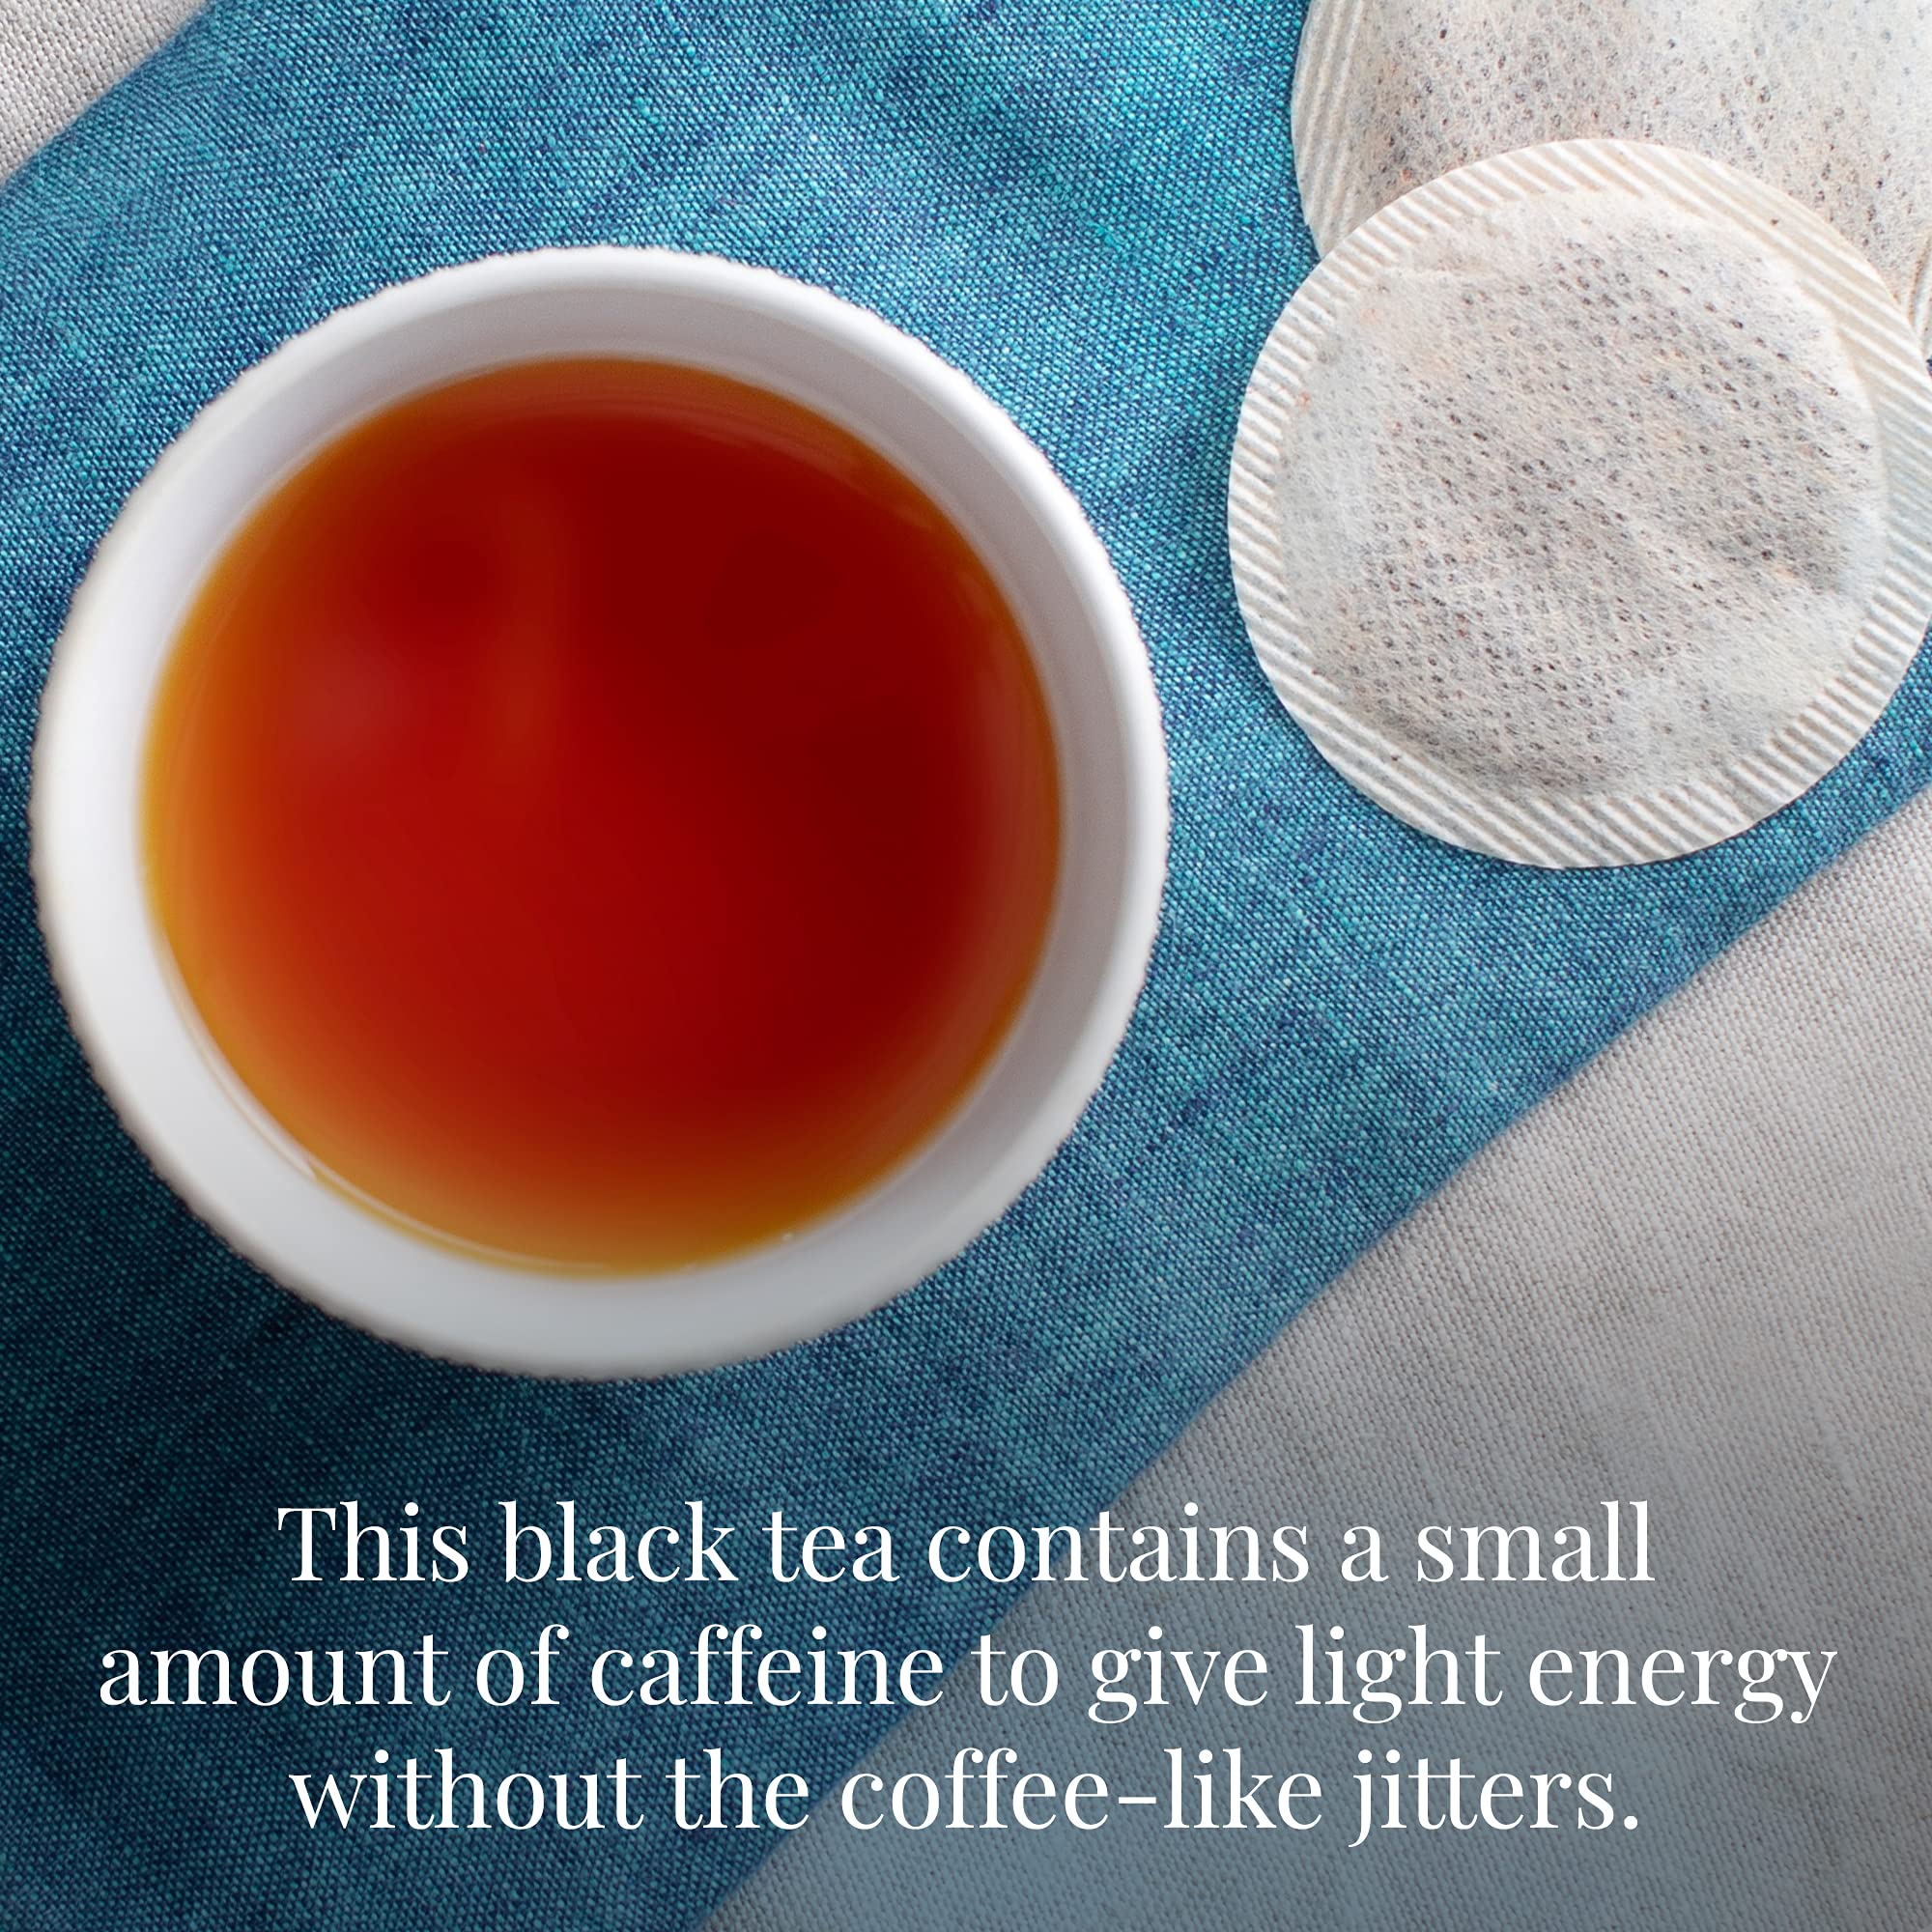 The Republic of Tea Blackberry Sage Black Tea | 50 Tea Bags, Gourmet Black Tea